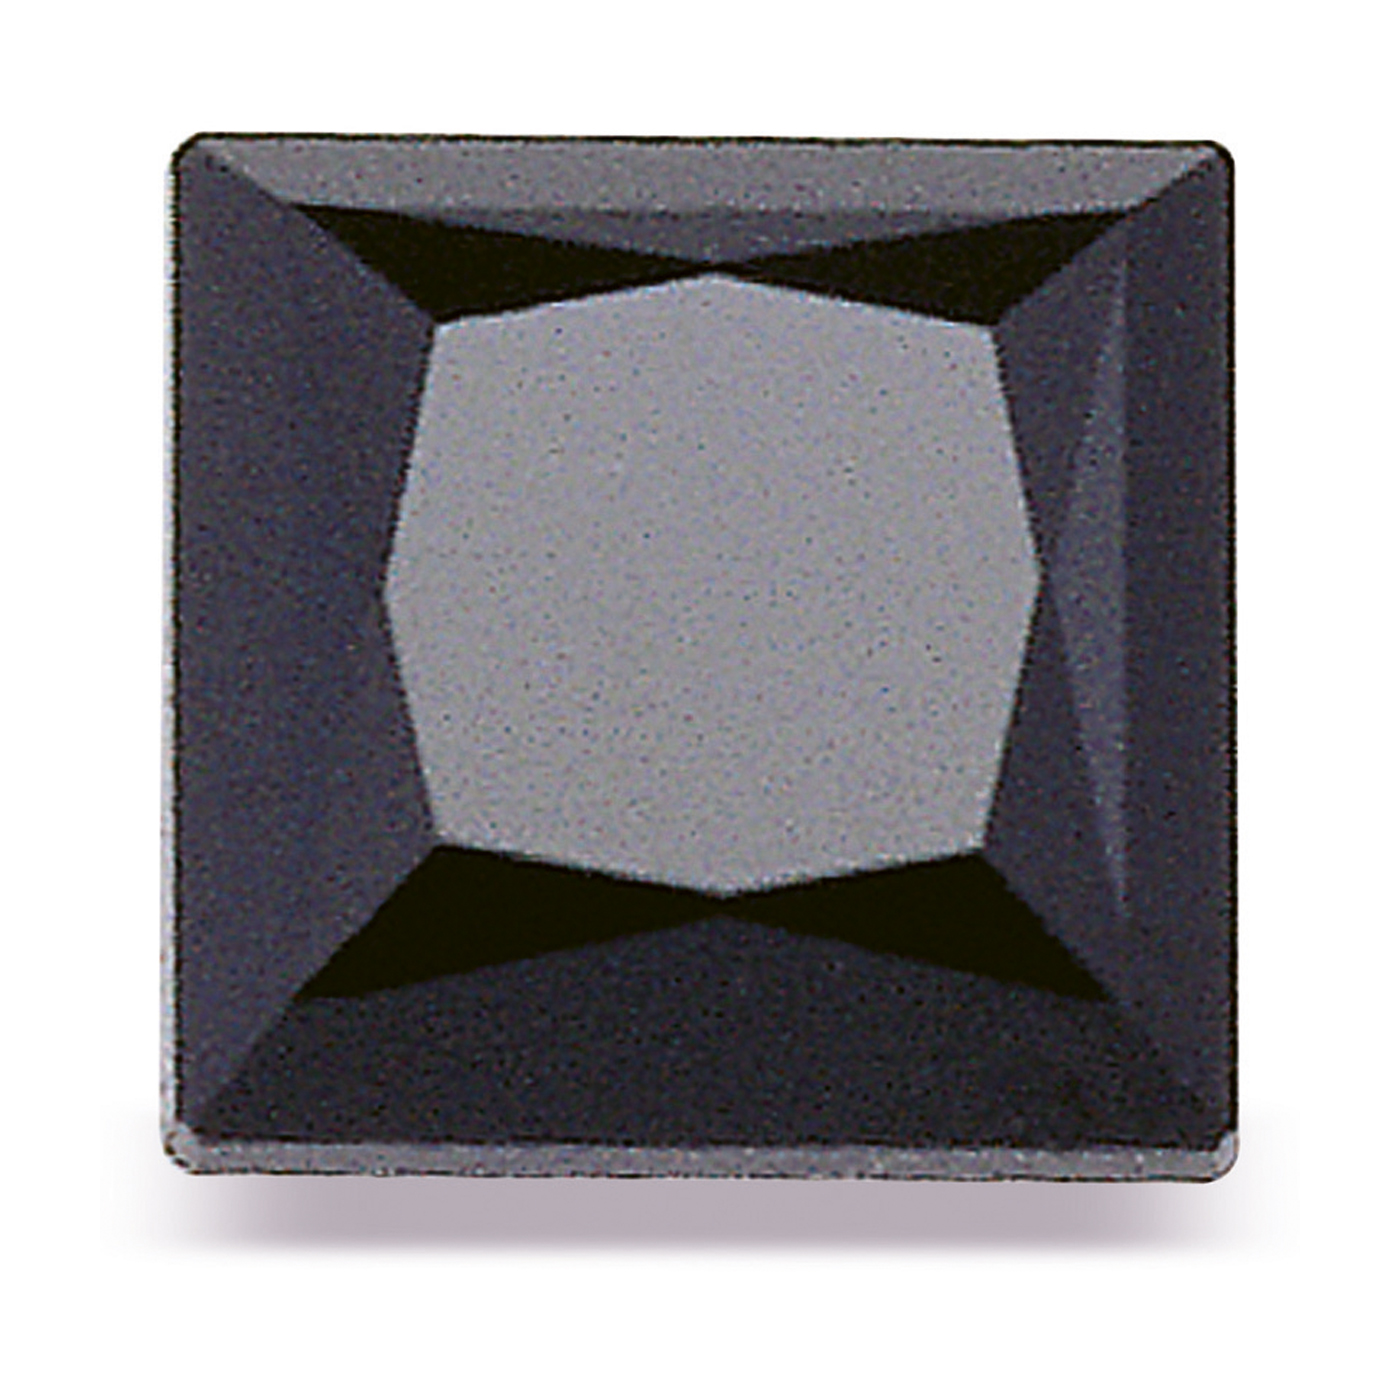 Swarovski Spinell, carré, facettiert, schwarz, 2 x 2 mm - 5 Stück